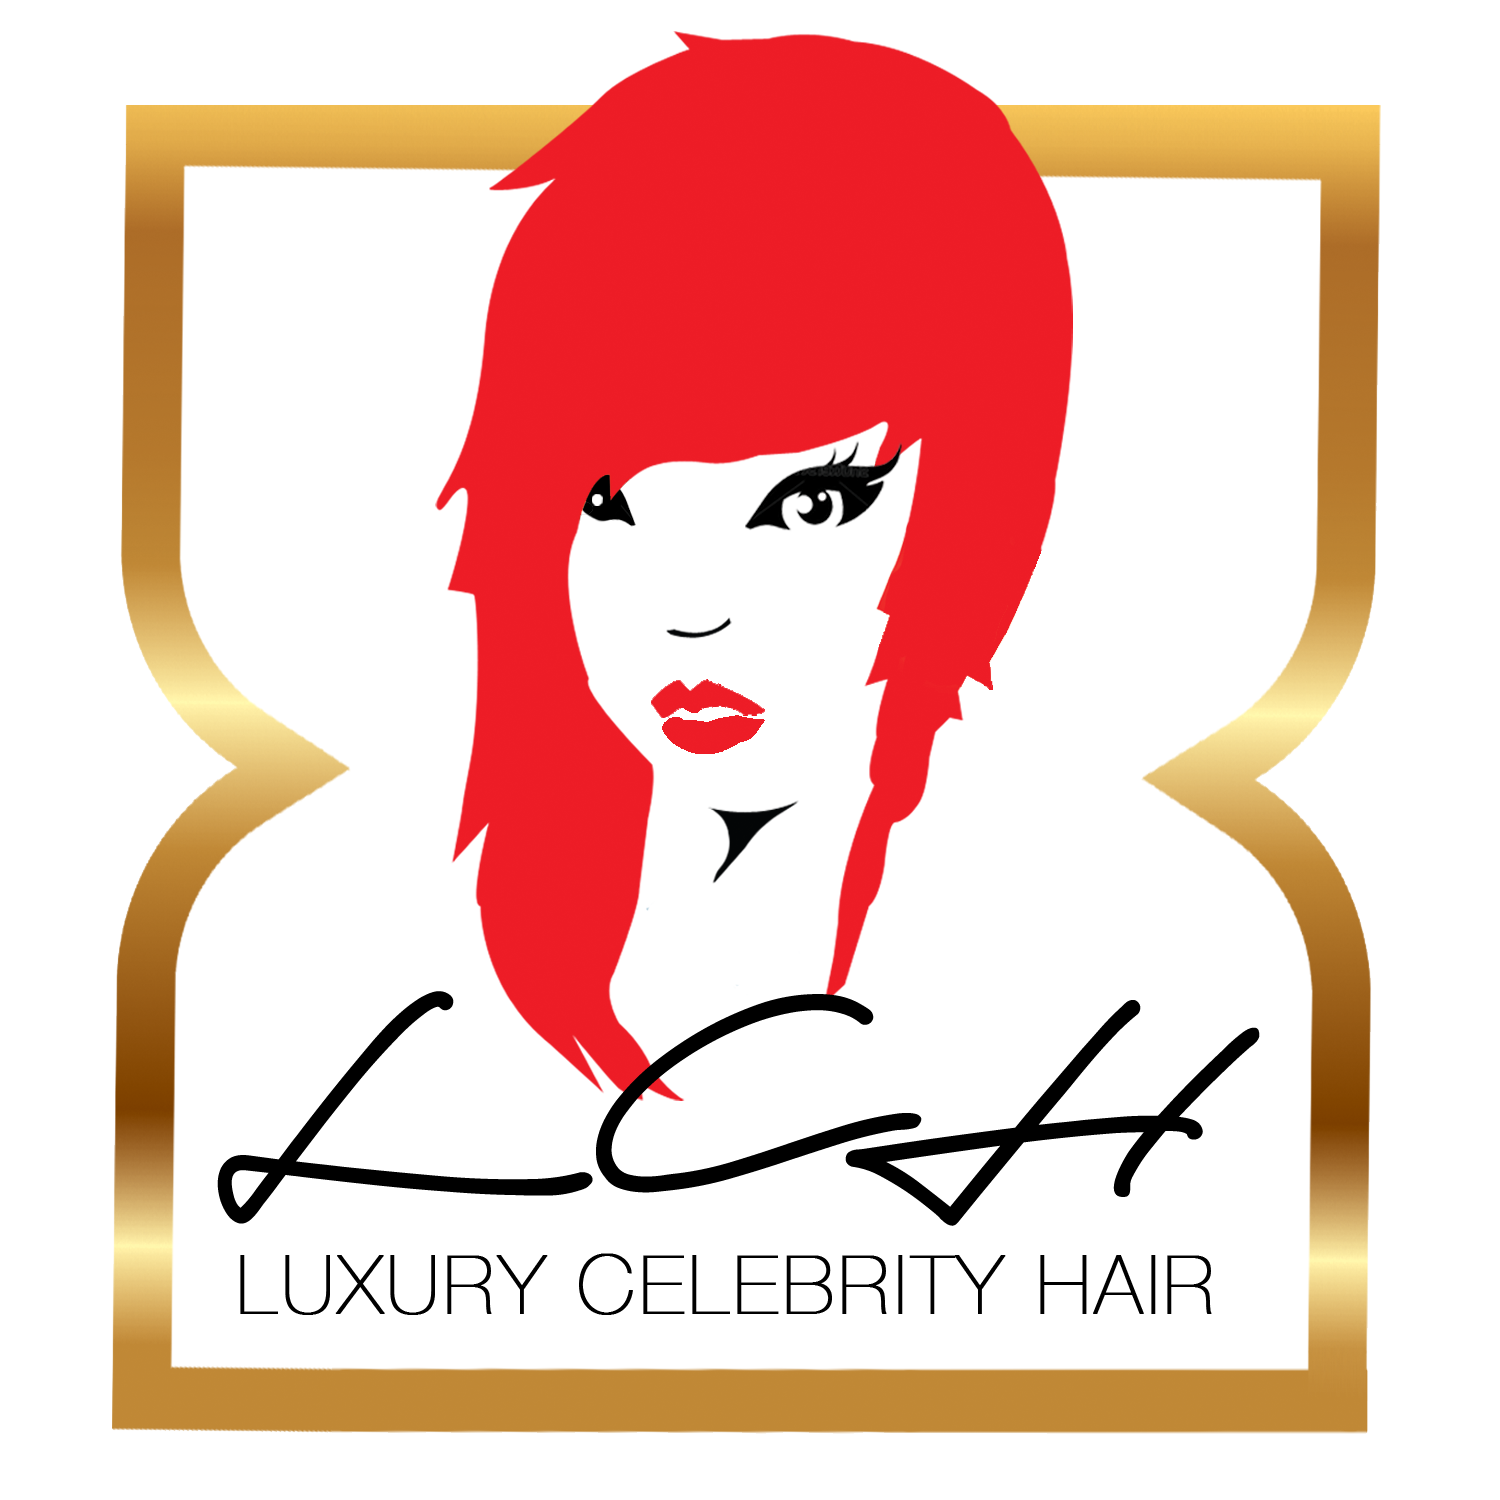 Shampoo clipart washing hair. Care luxury celebrity 